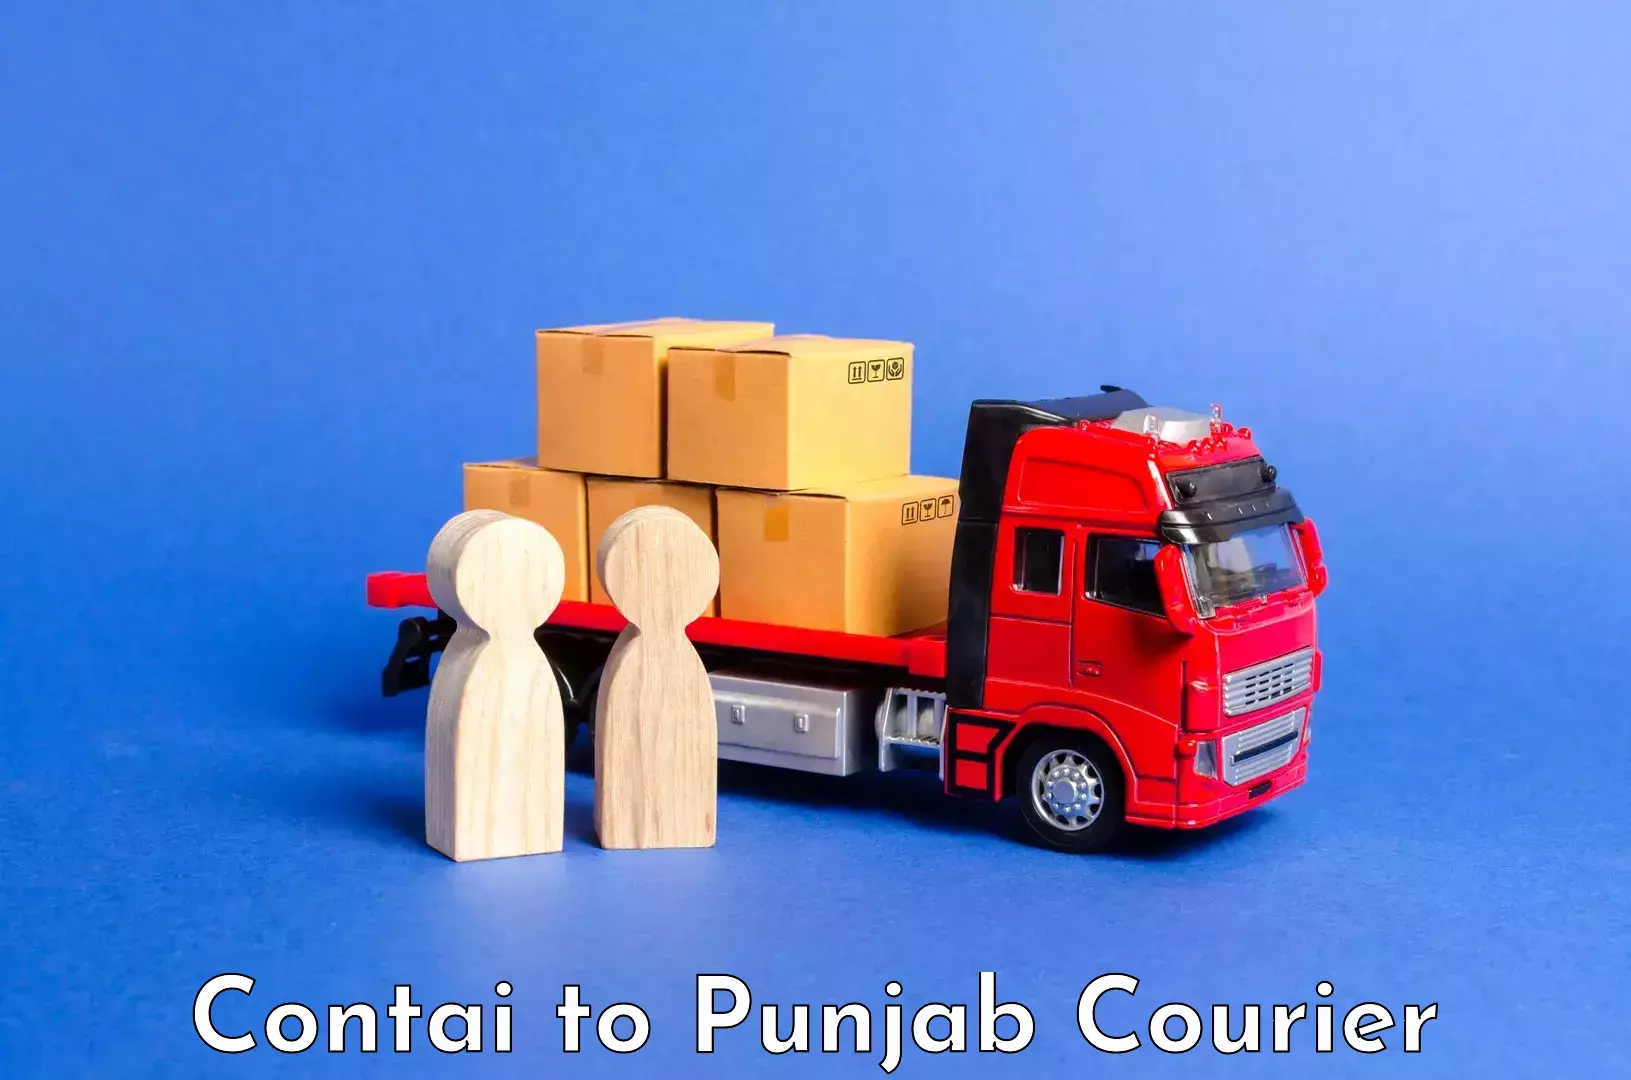 Holiday season luggage delivery Contai to Punjab